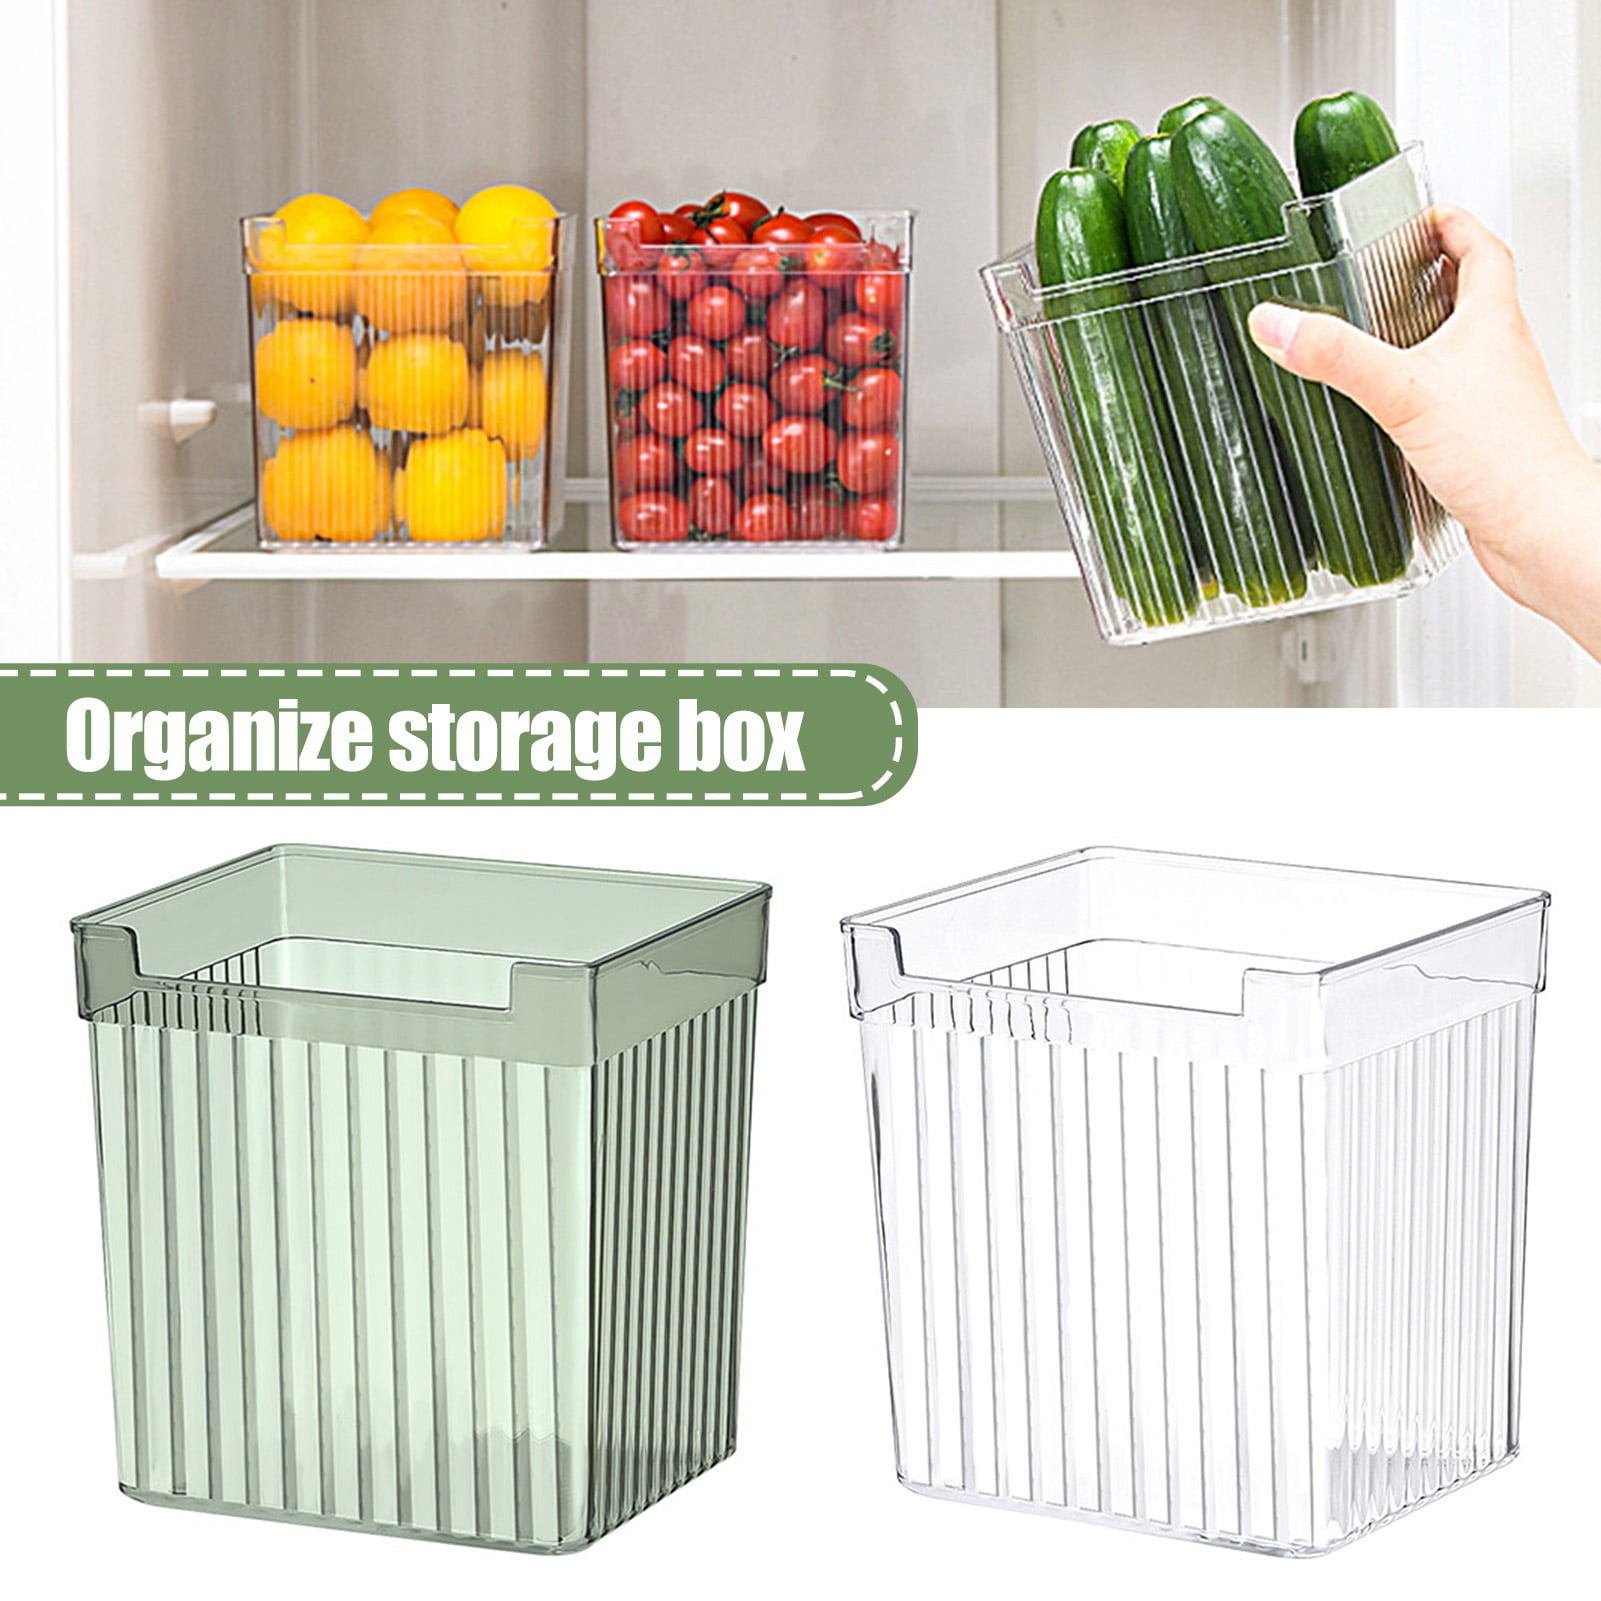 Bobasndm Fresh Vegetable Fruit Storage Containers, BPA-free Fridge